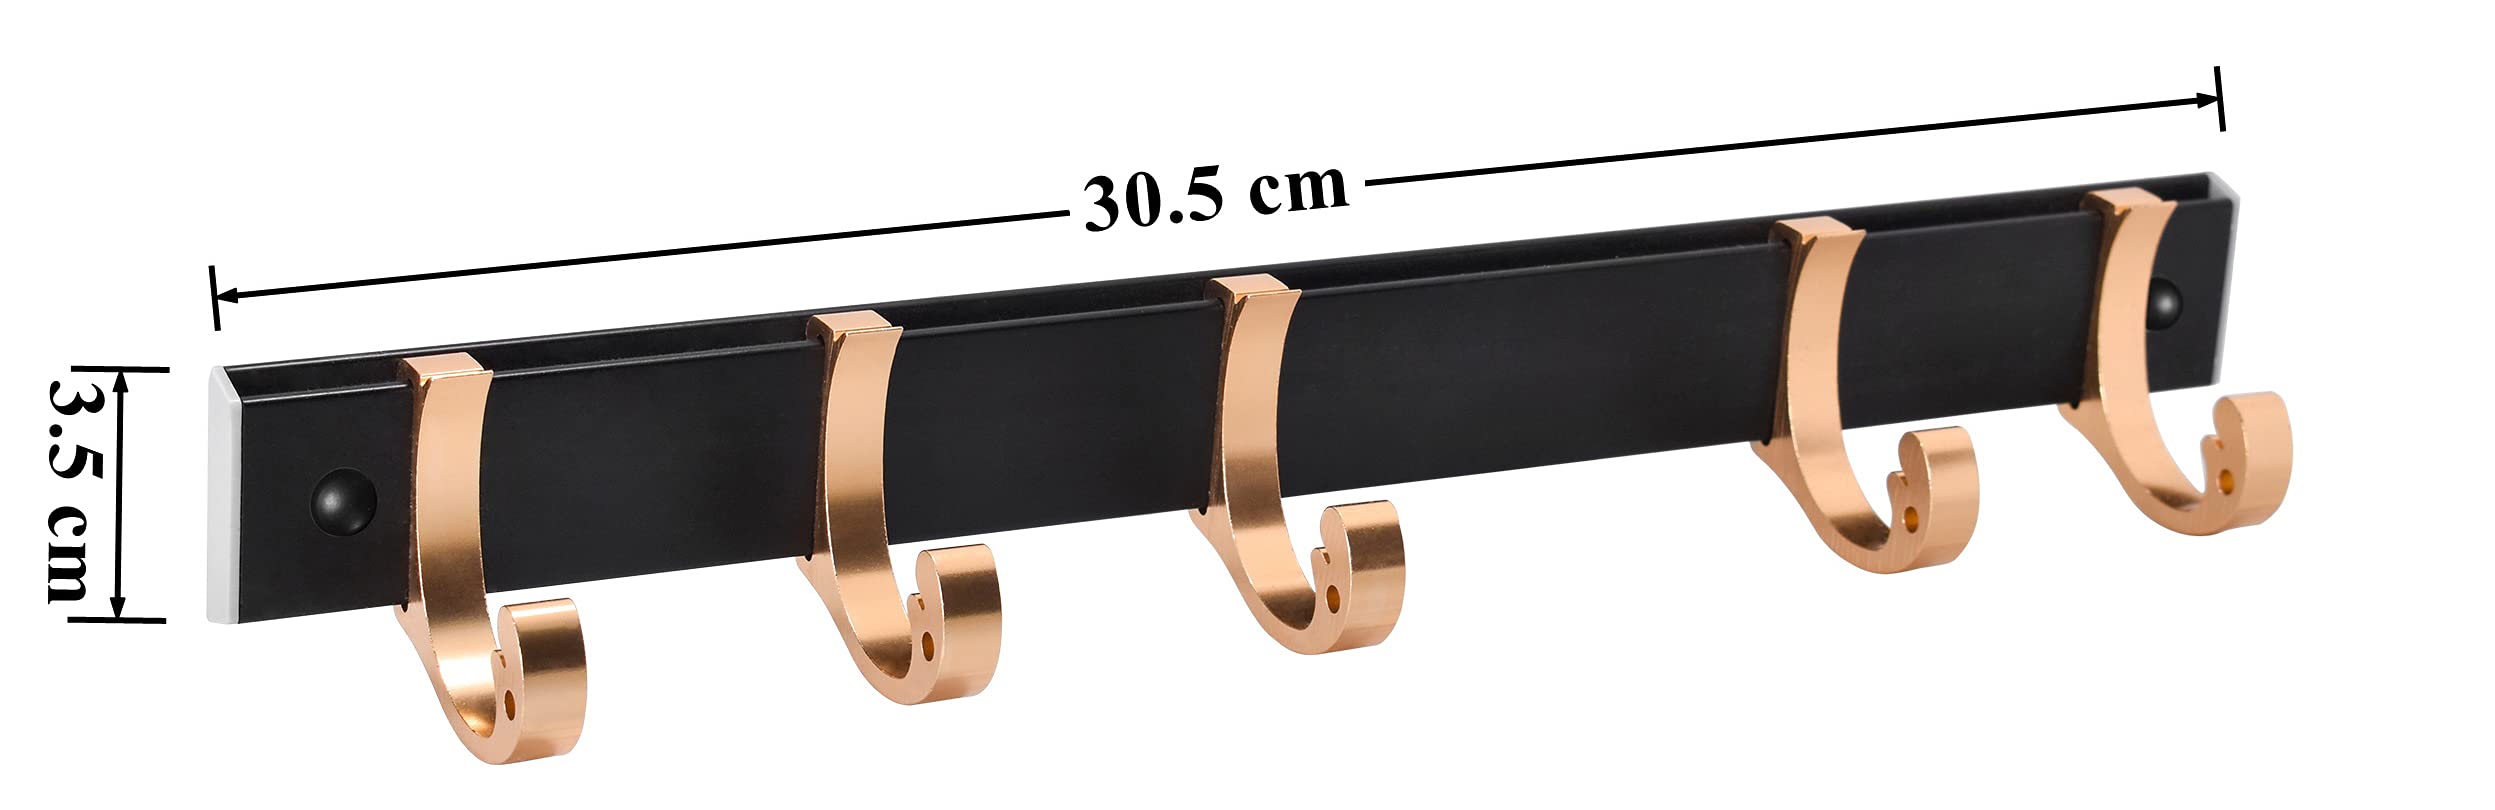 Plantex Aluminium Hook Rail with Movable Hooks for Walls of Kitchen/Bathroom – Hook Rail Bar for Clothes/Towel/Keys (5 Hooks) - Black & Gold